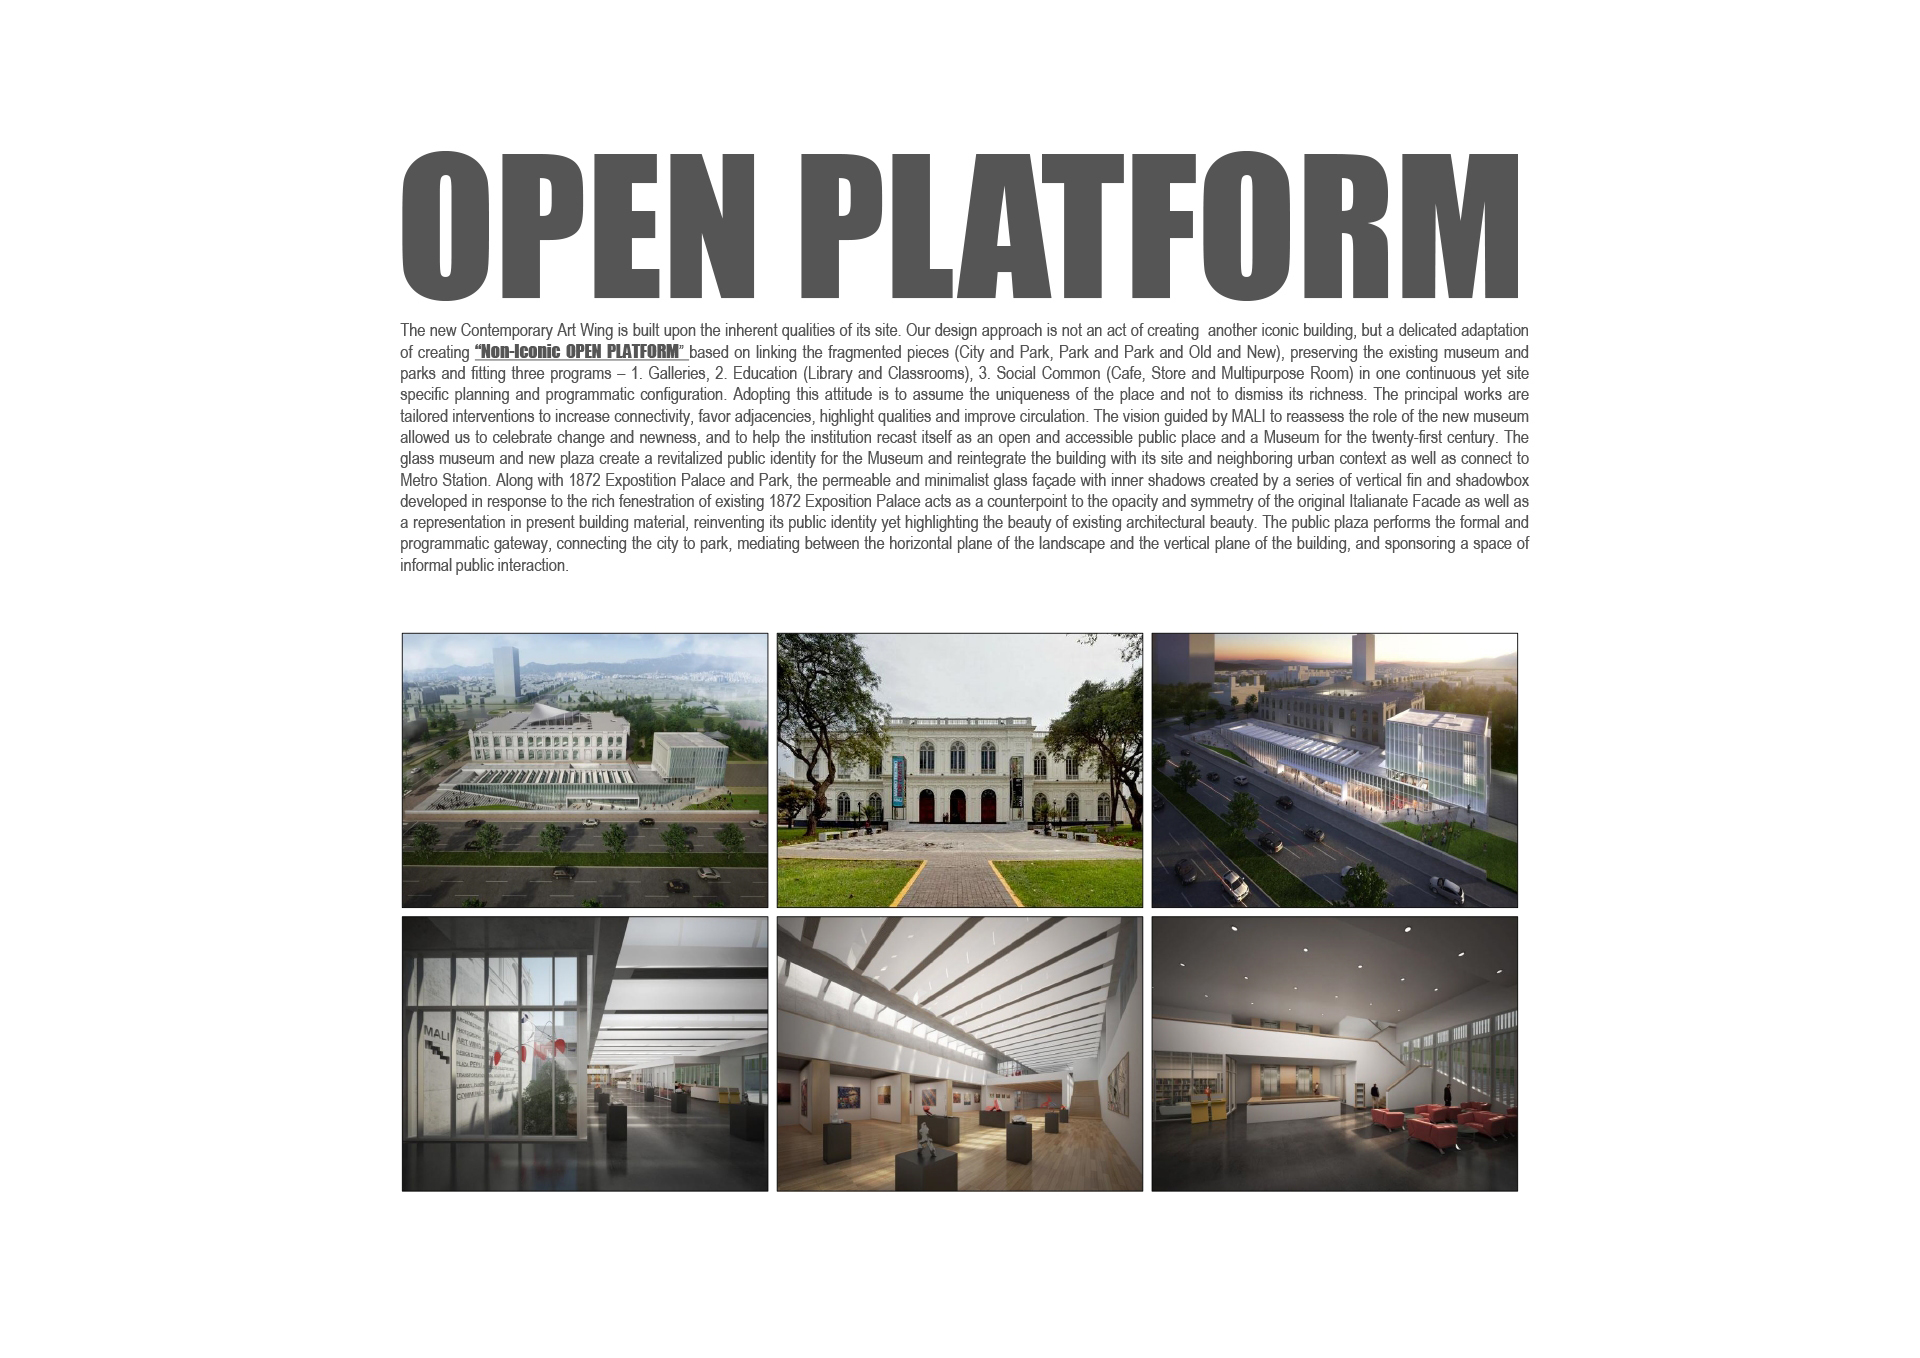 open platform